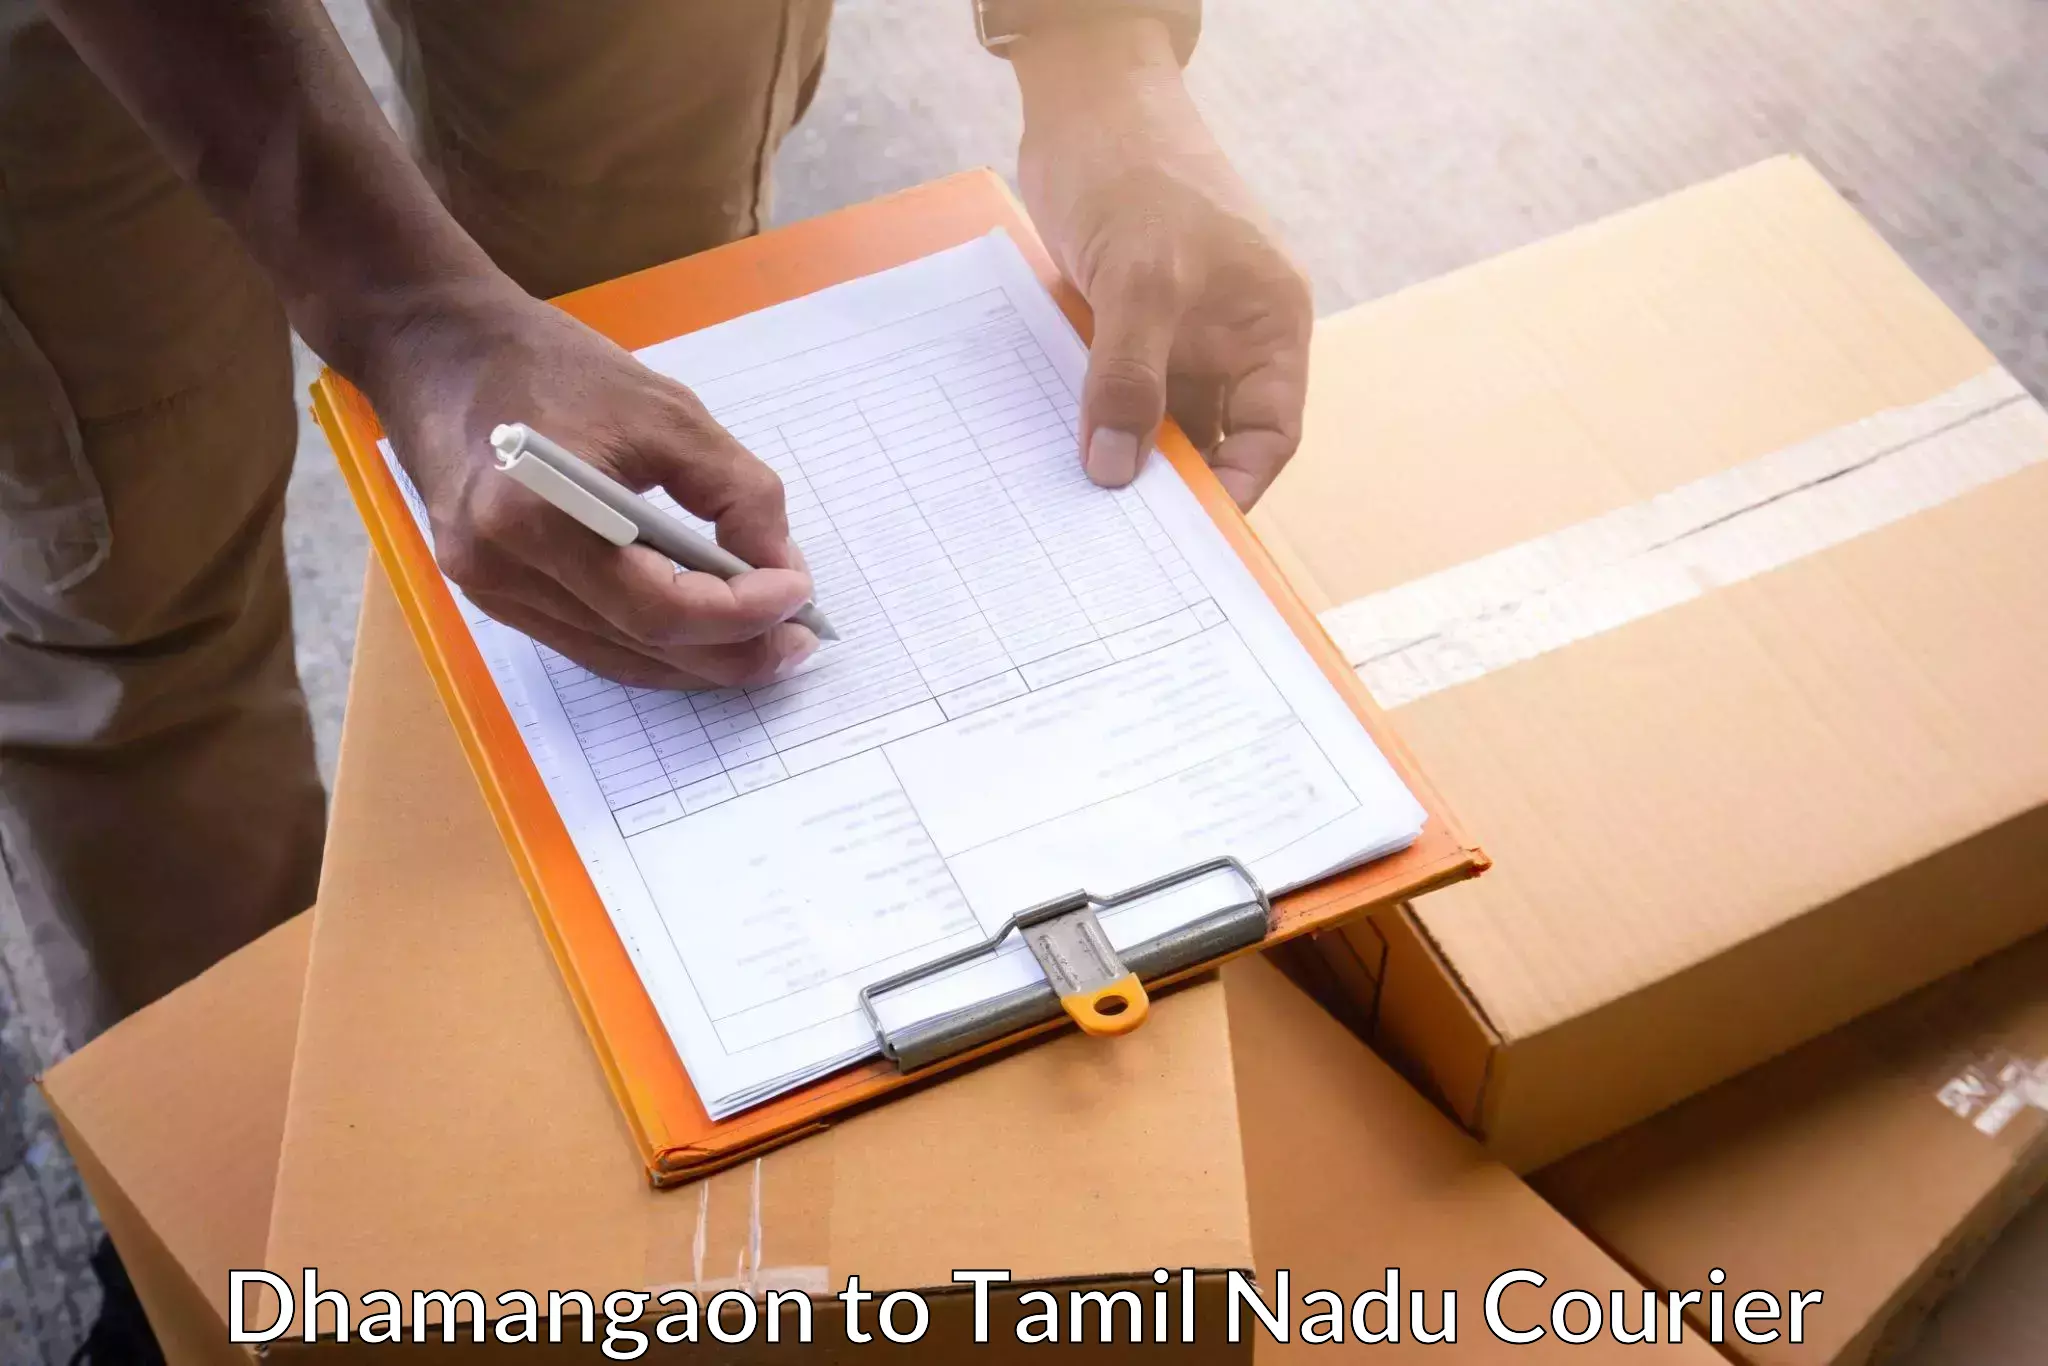 Urgent courier needs Dhamangaon to Tirupattur